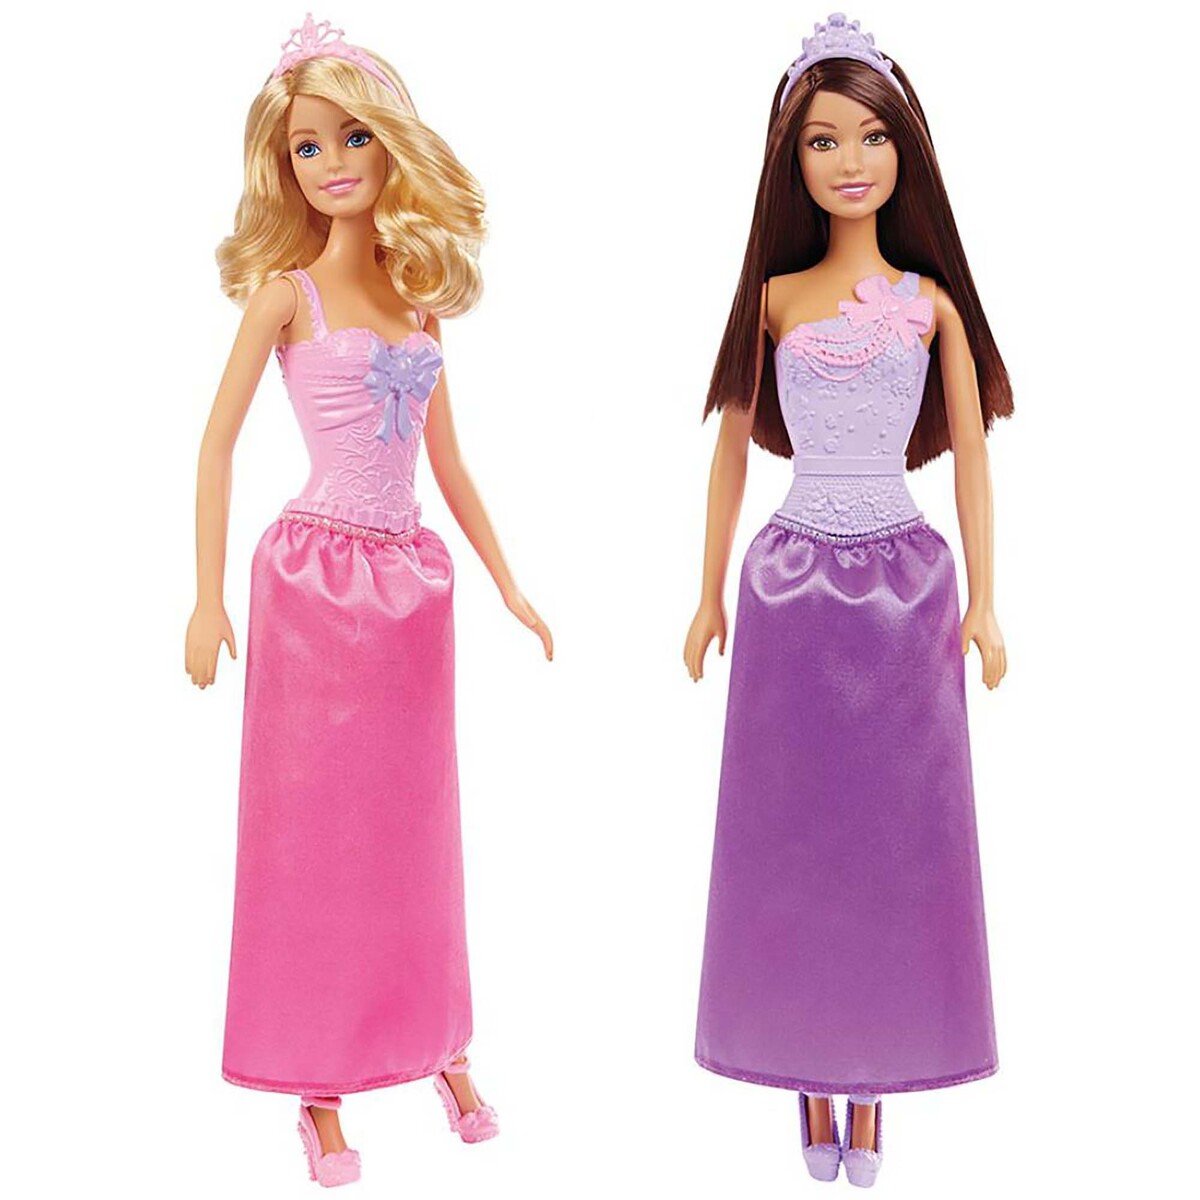 Barbie Basic Princess Doll, Assorted, DMM06